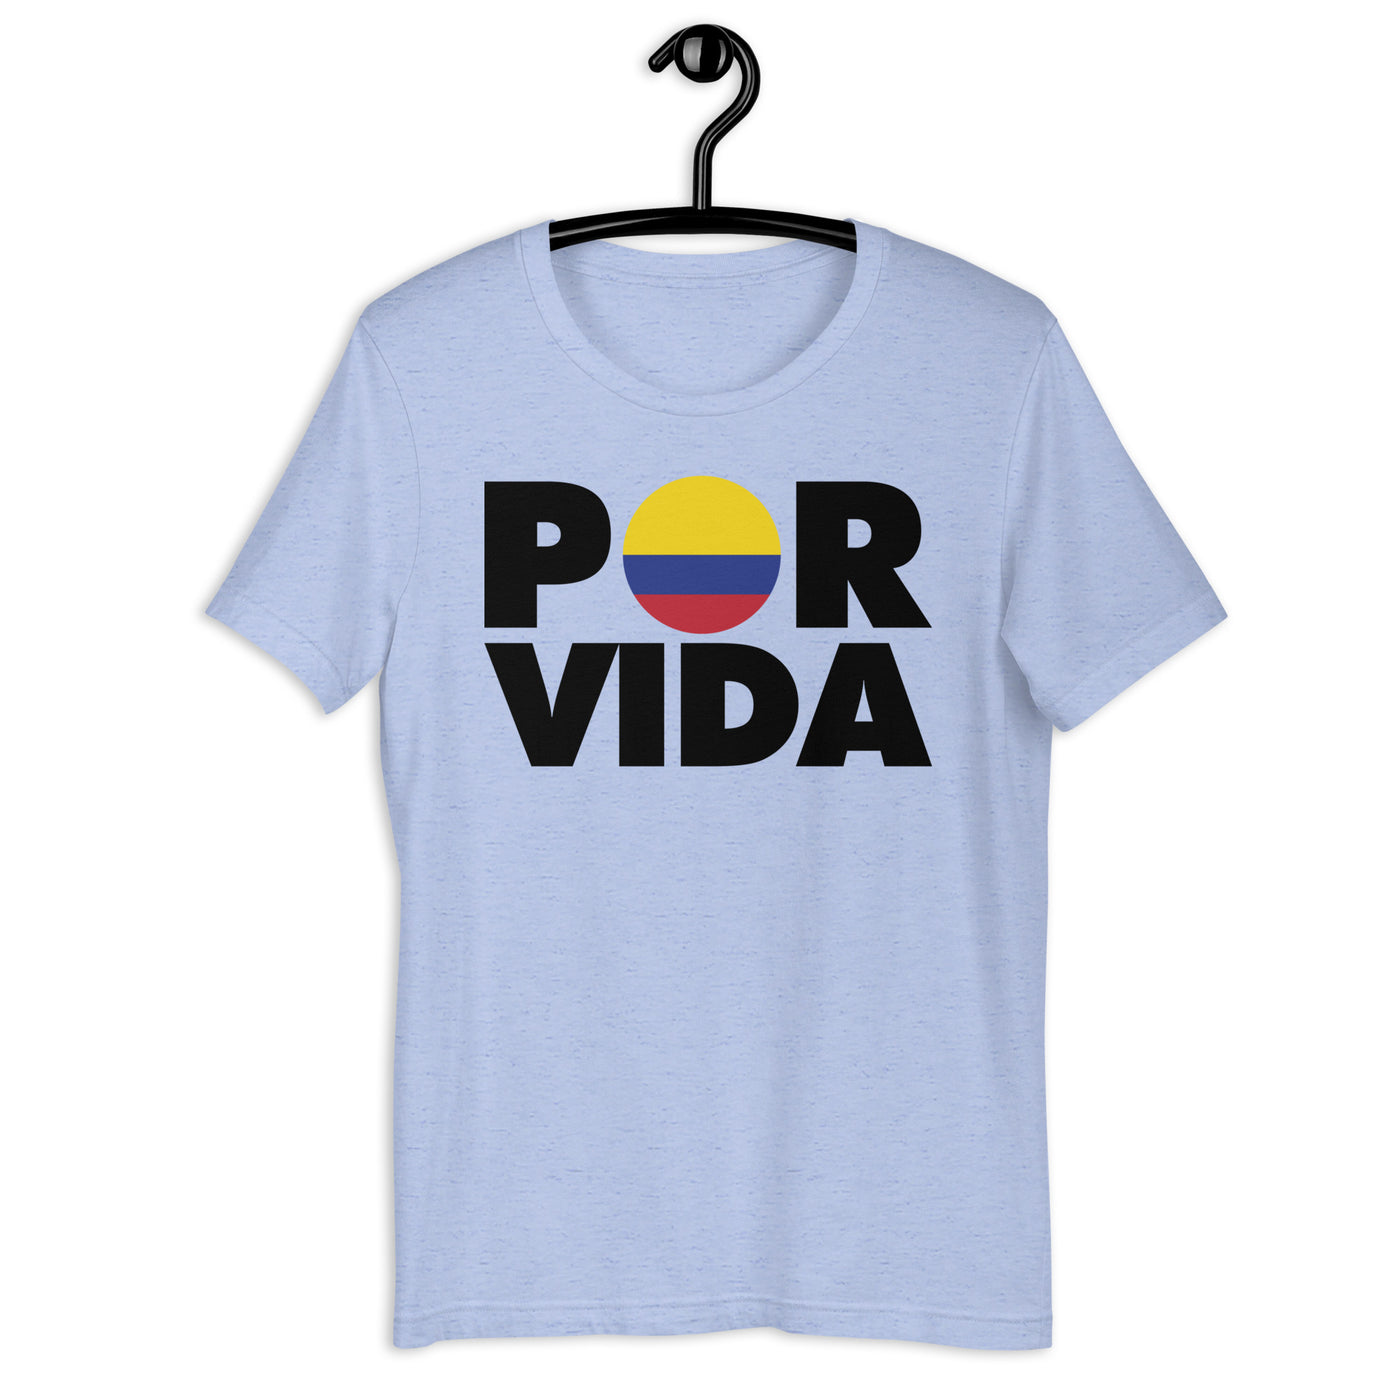 POR VIDA Colombia (Black Text) Unisex t-shirt